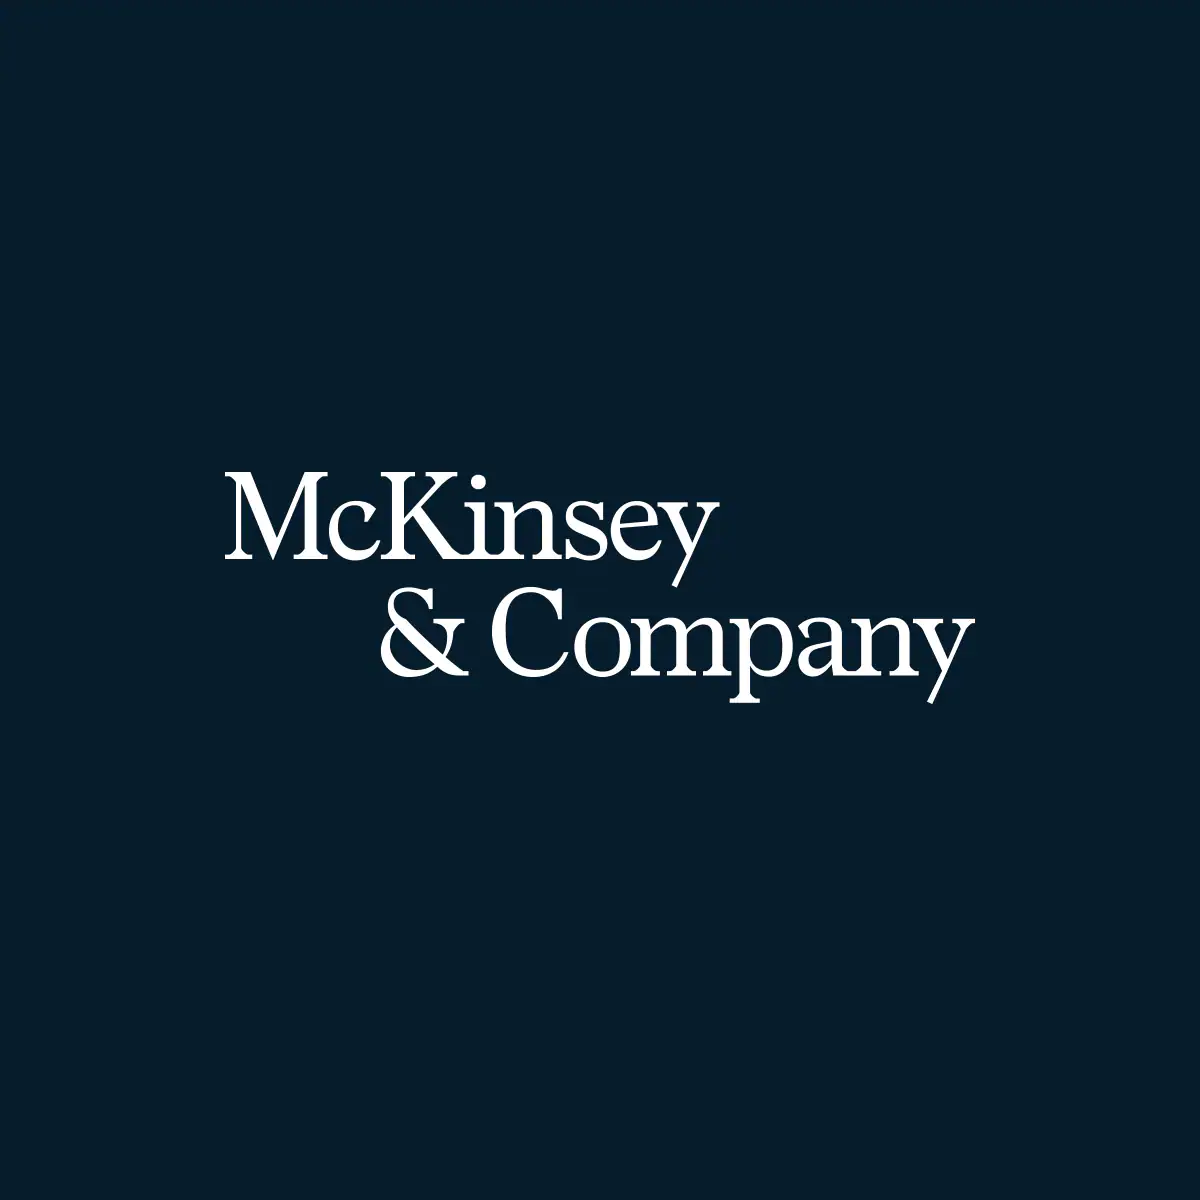 Human Resources Internship at McKinsey & Company